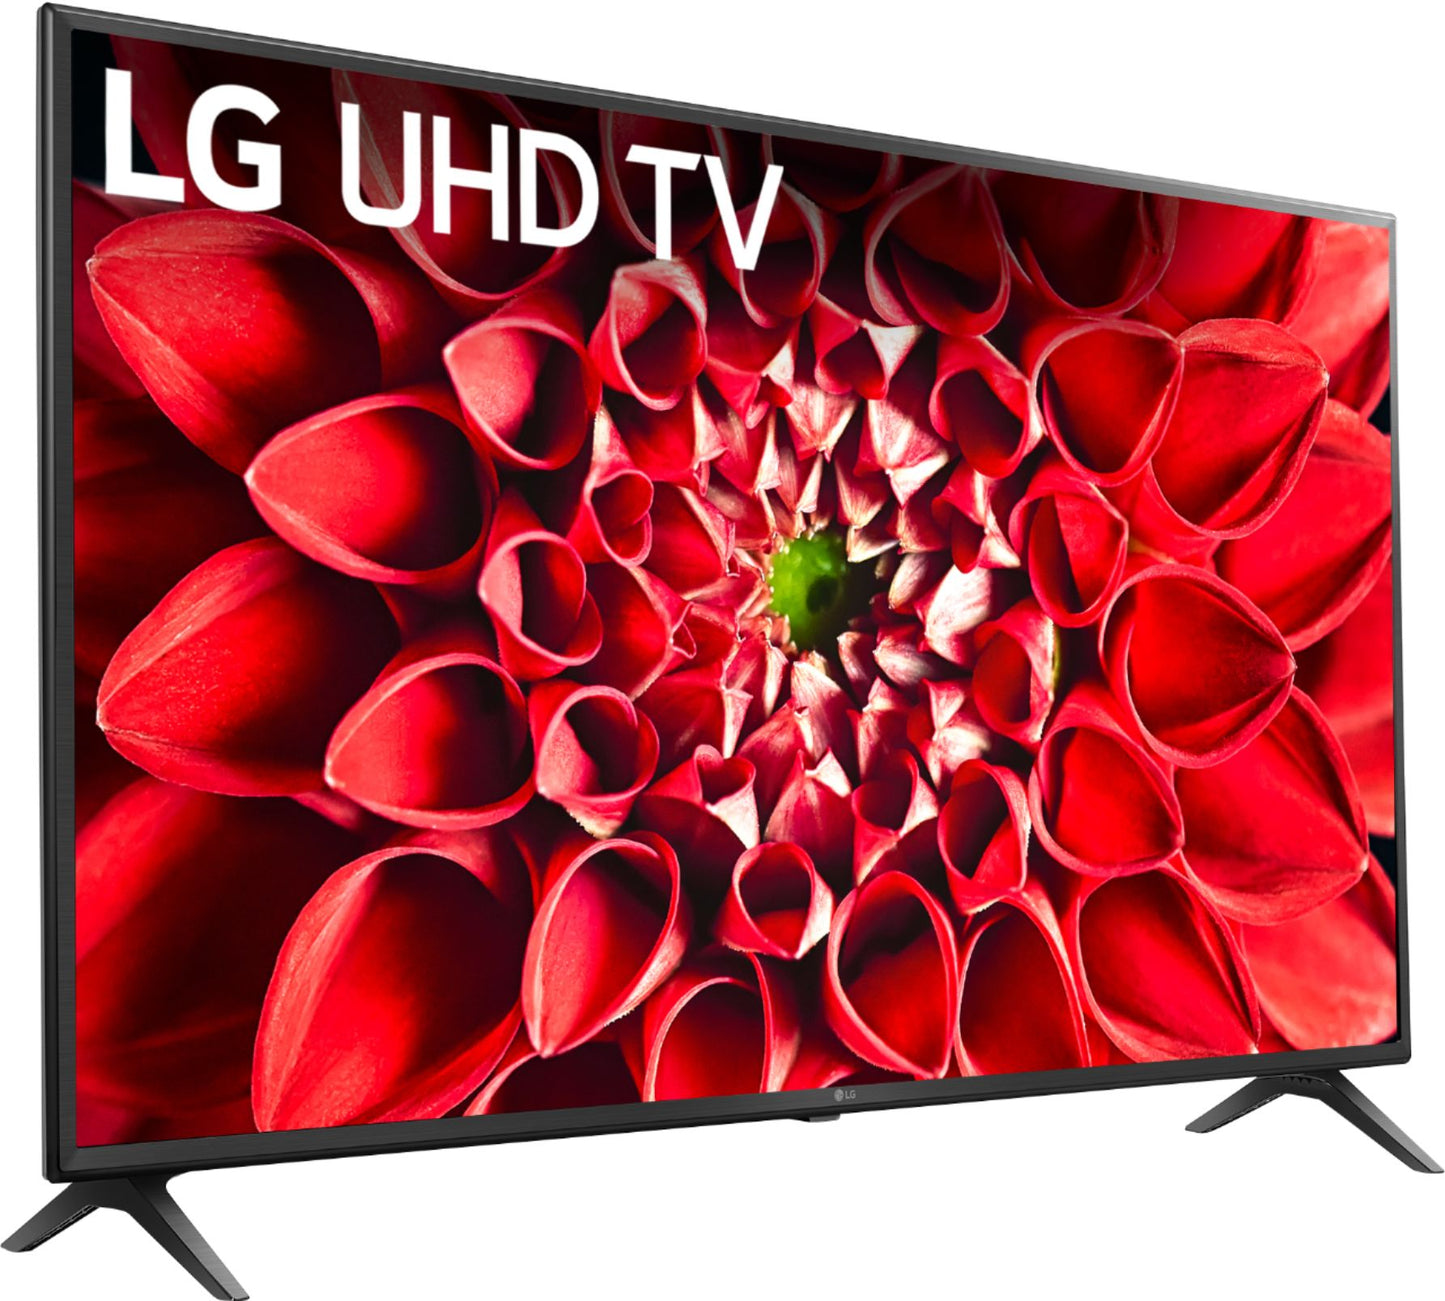 LG 55UP7750 Smart 4k UHD TV 55 inch